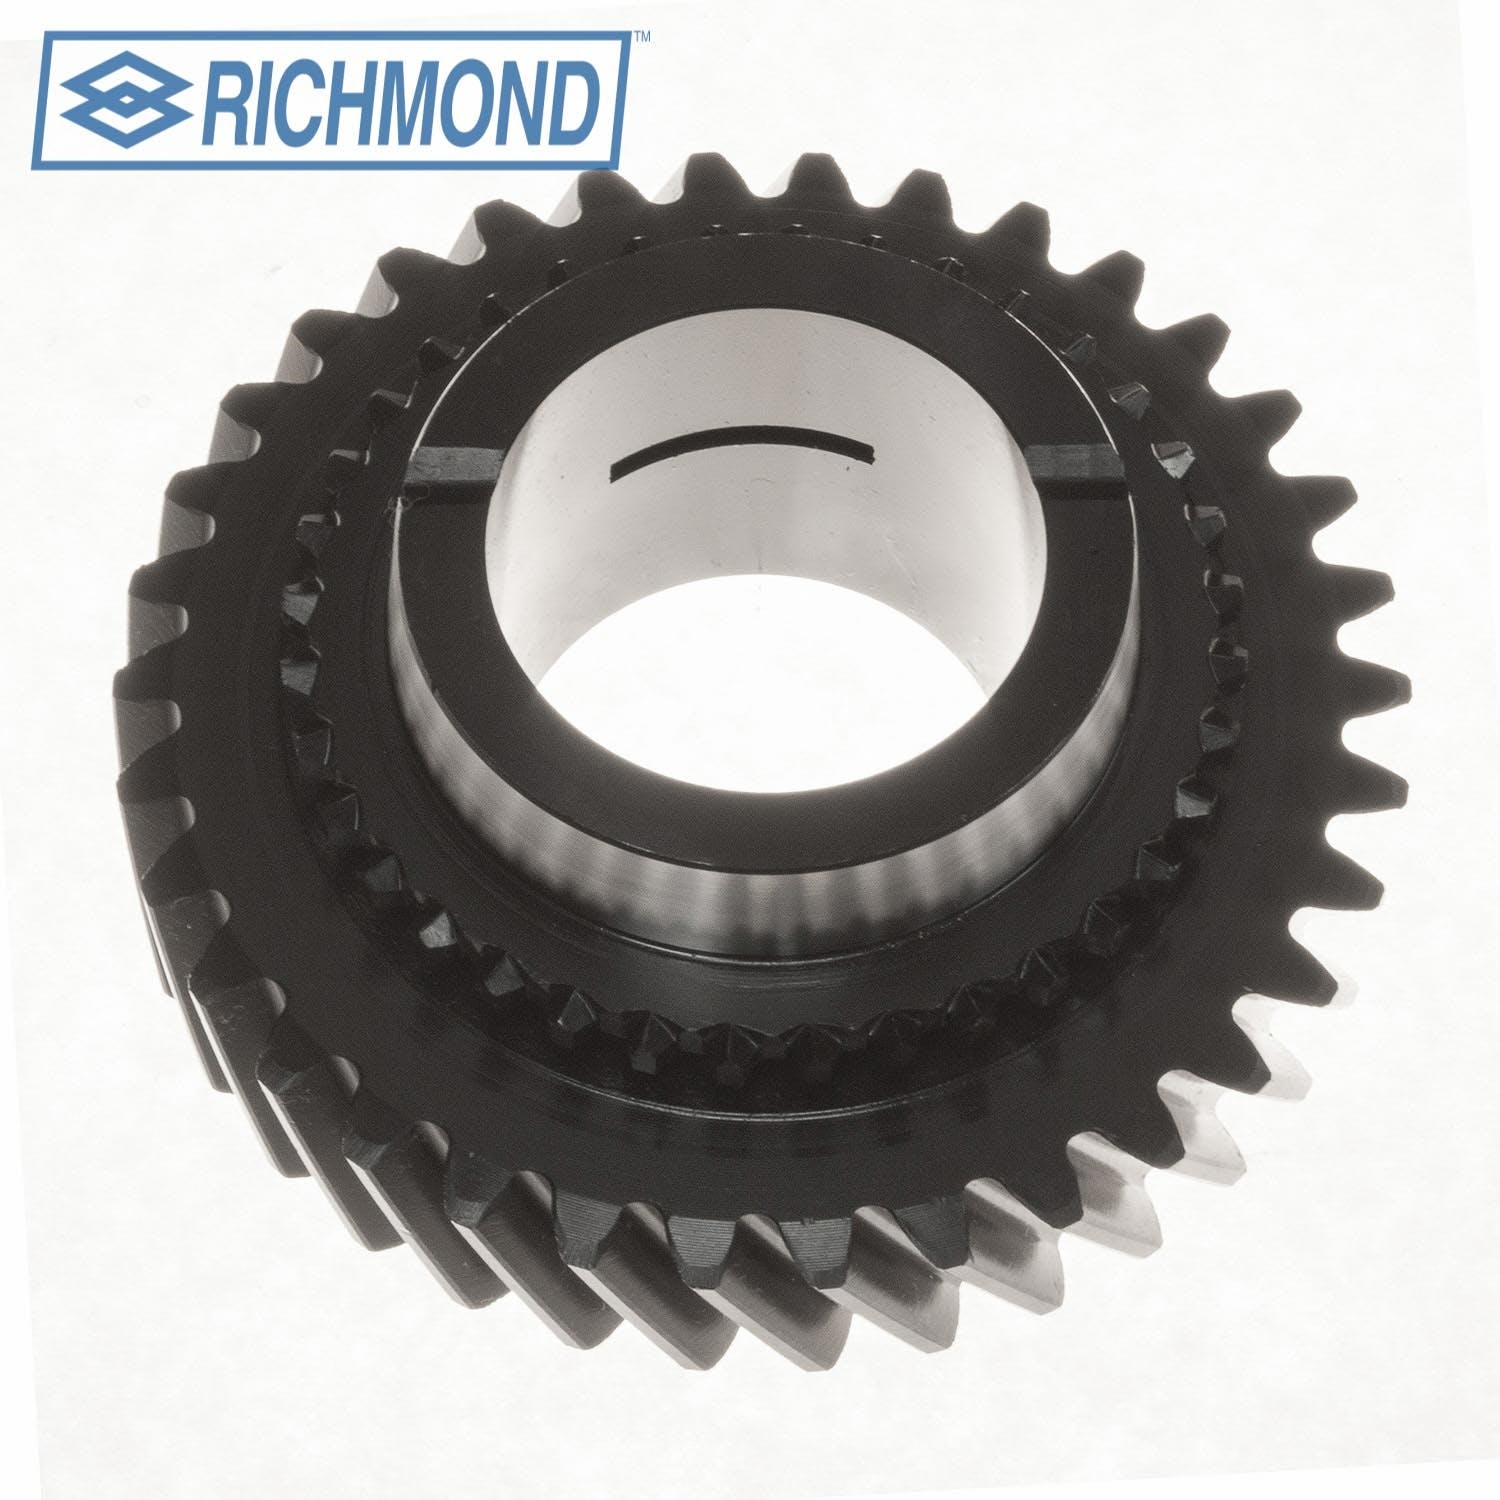 Richmond 1304080004 1ST Gear 34T (W,S,CC,X,Y)